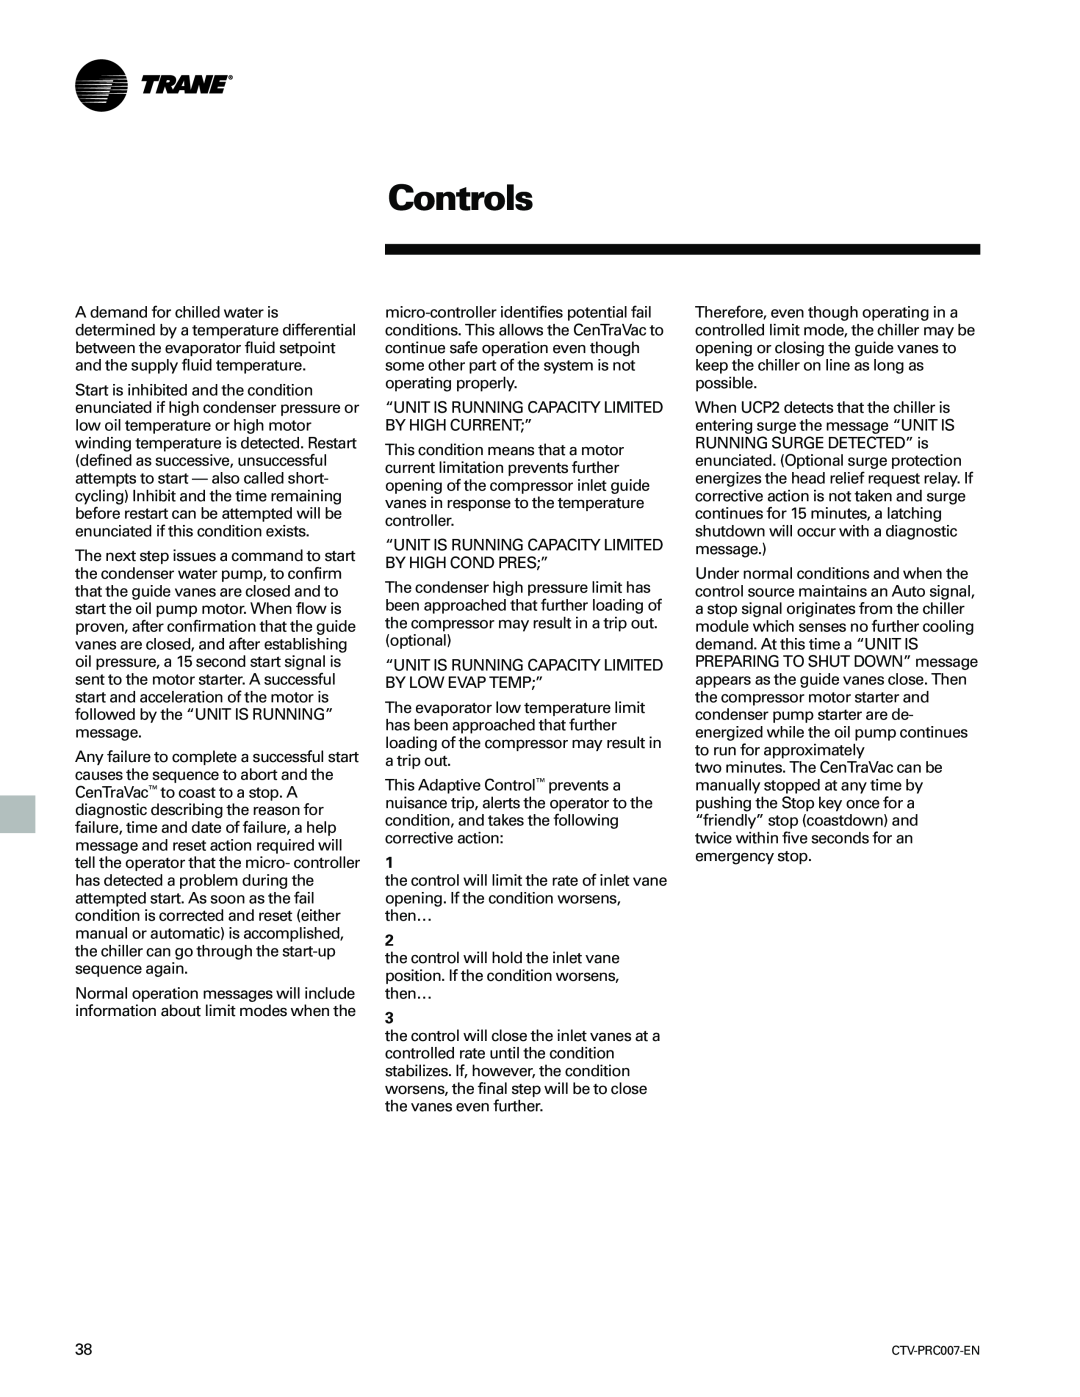 Trane ctv-prc007-en manual Controls 